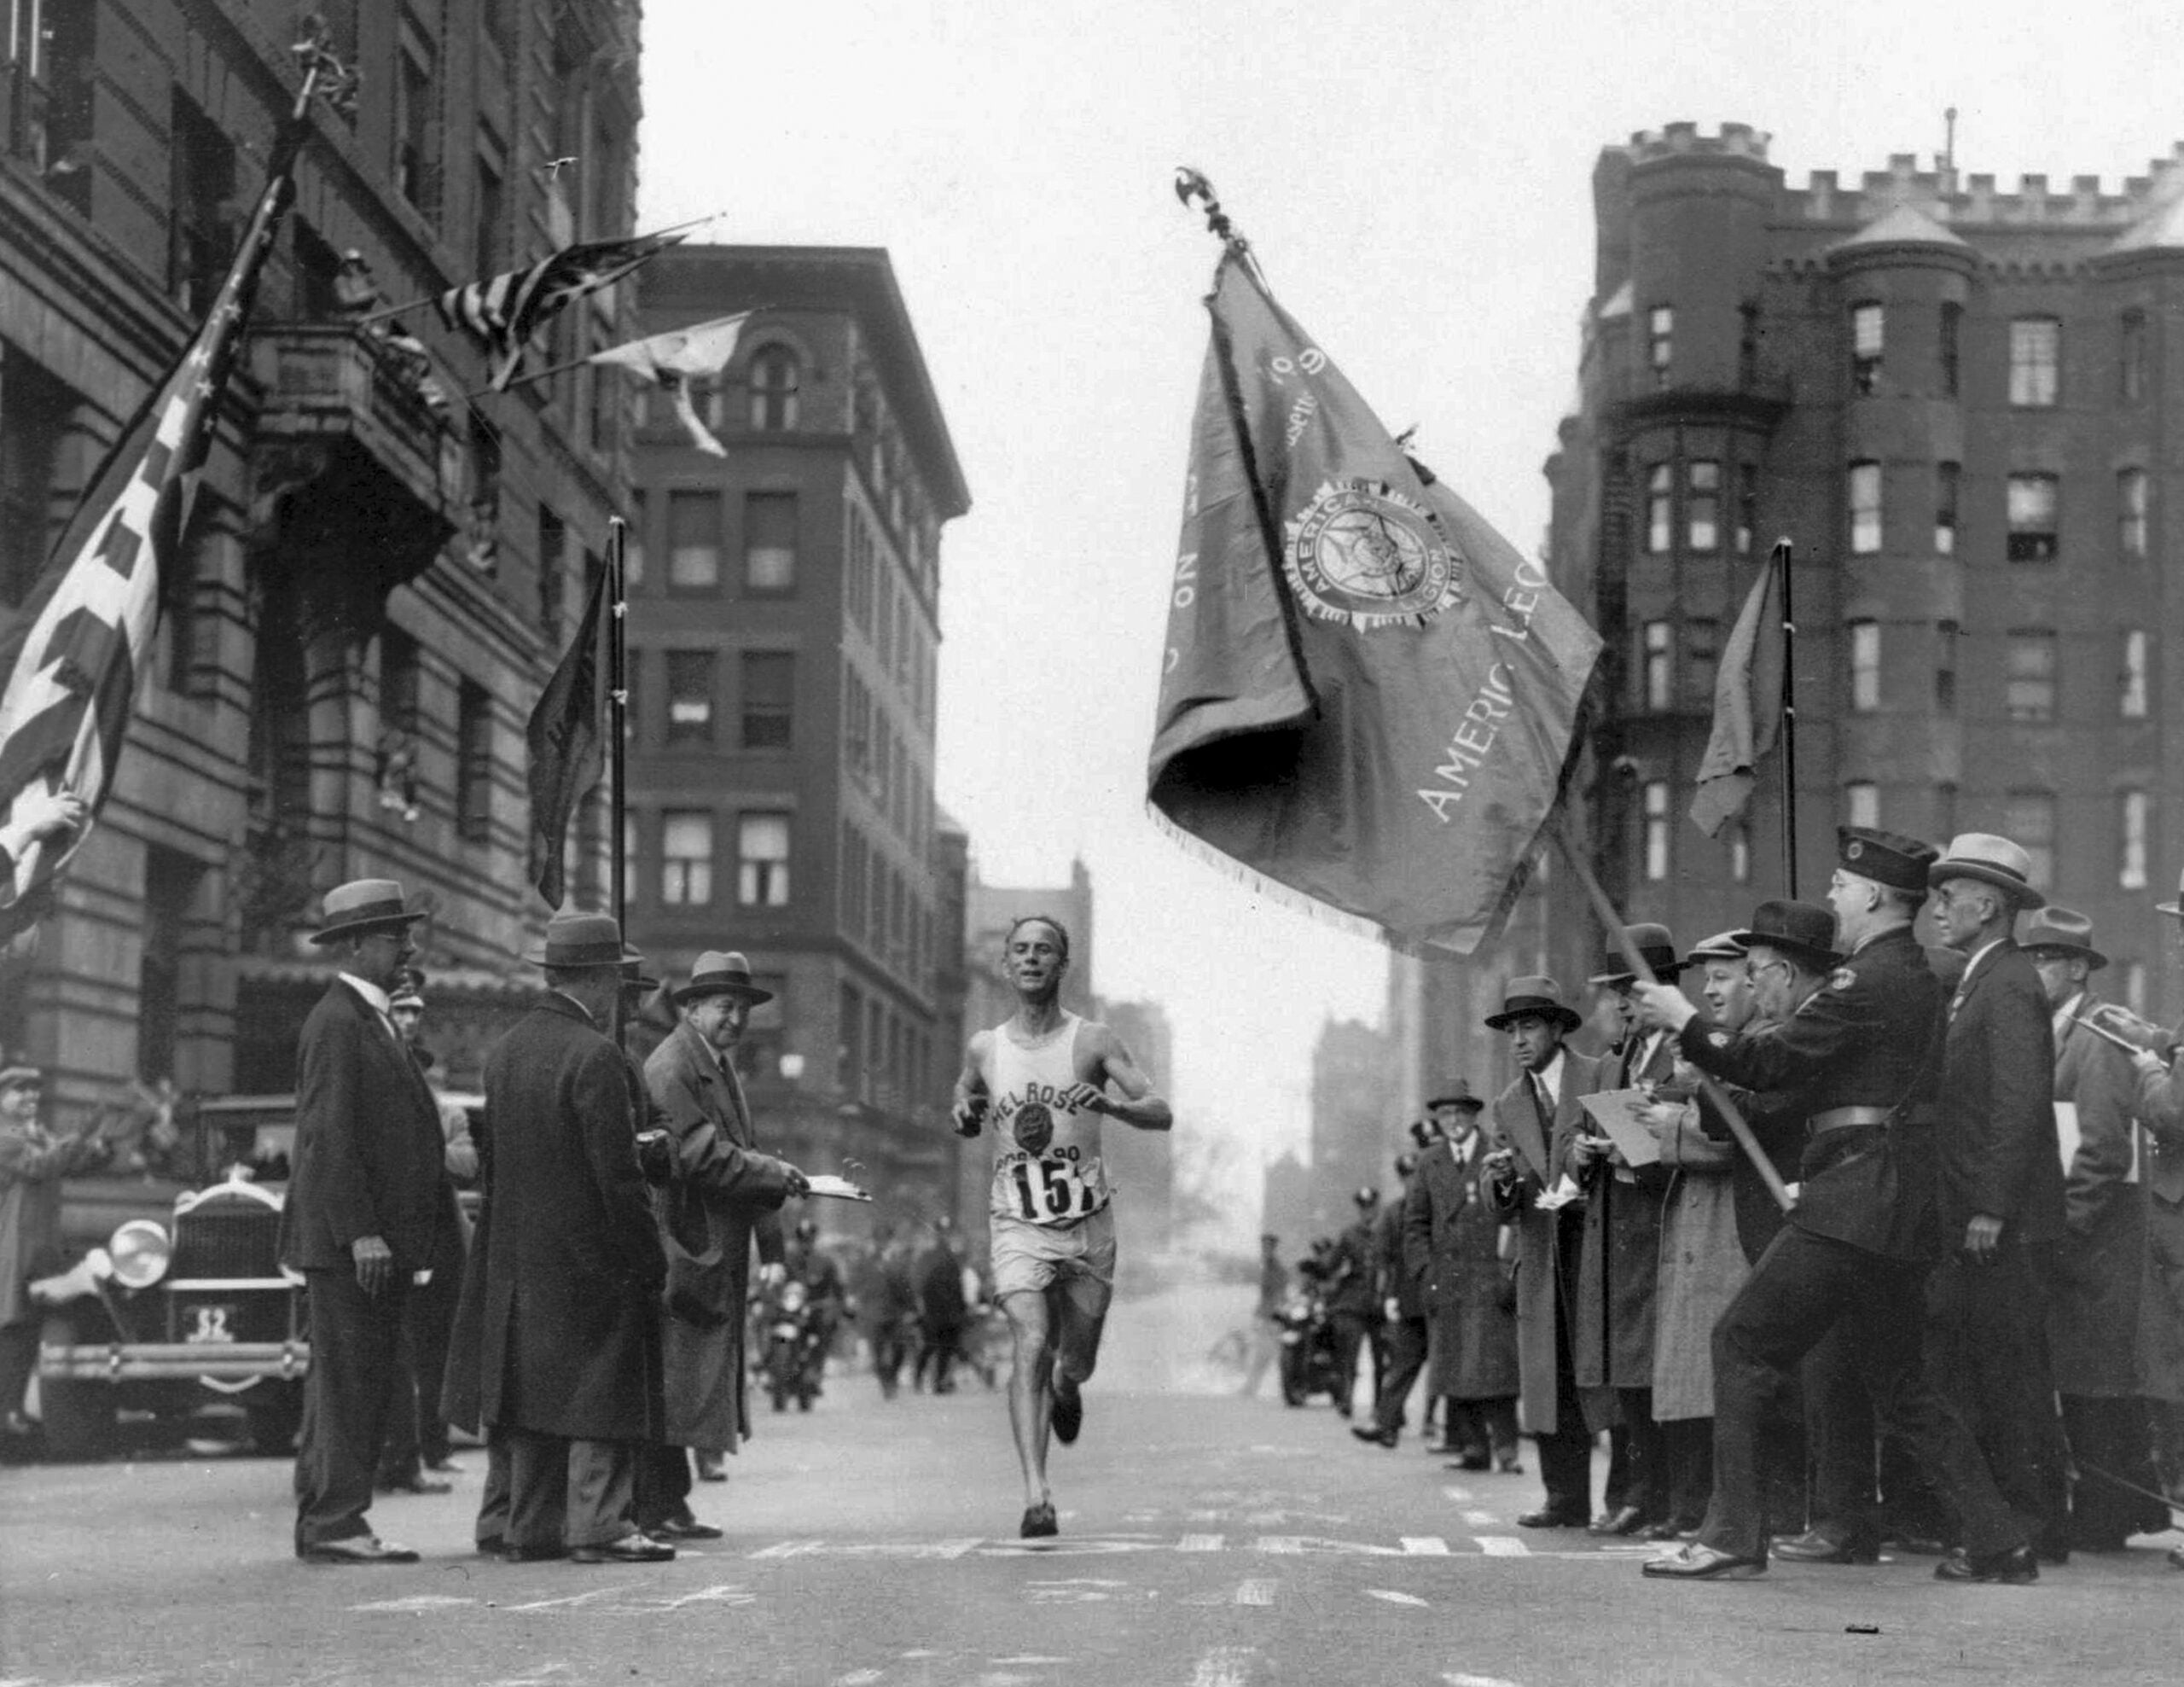 Documentary chronicles Boston, 'granddaddy of all marathons'